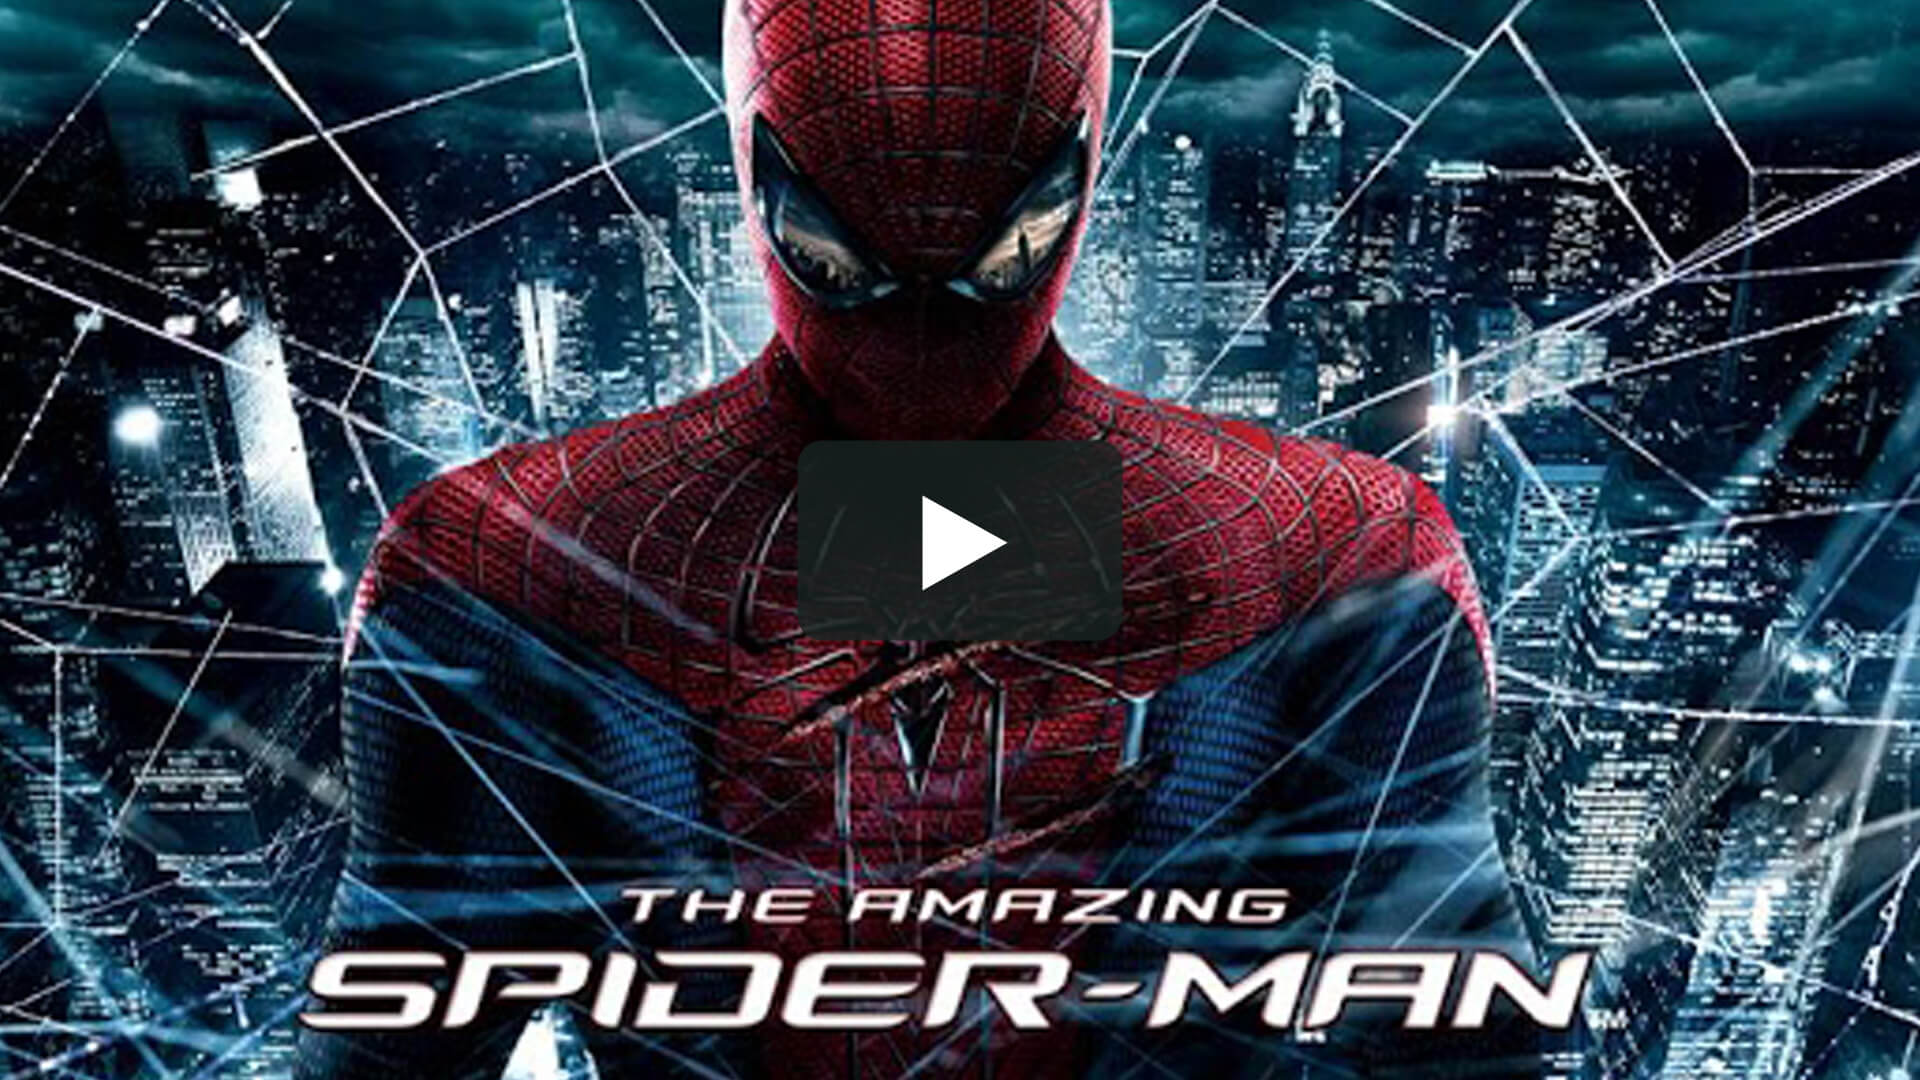 The Amazing Spider-Man - 超凡蜘蛛俠